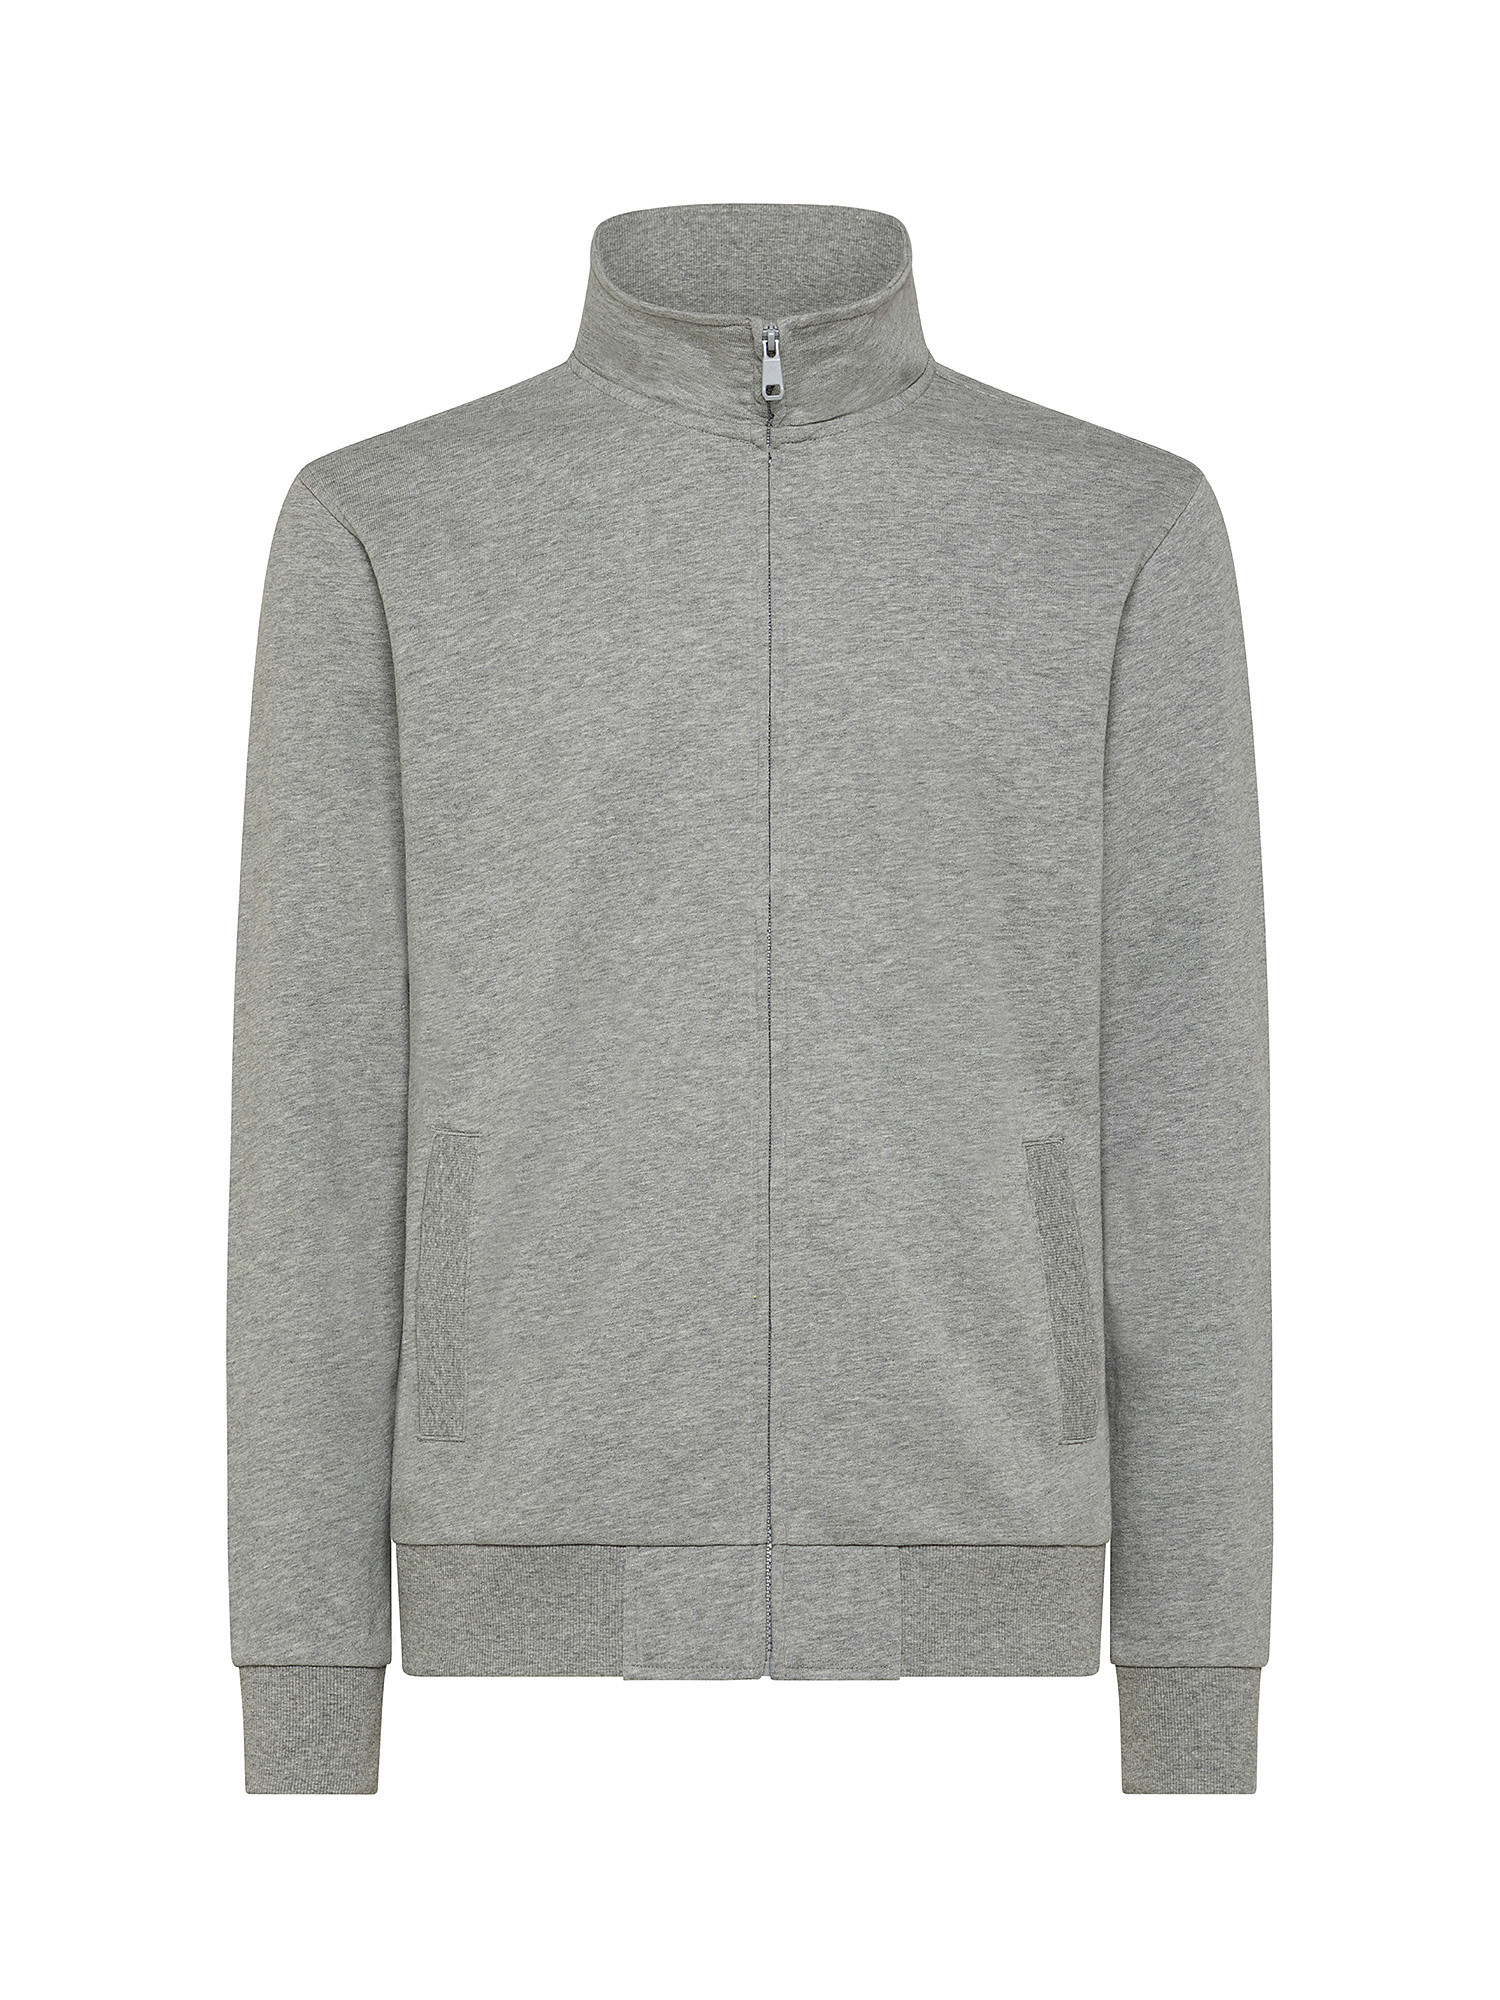 Sweatshirt with zip, Light Grey, large image number 0